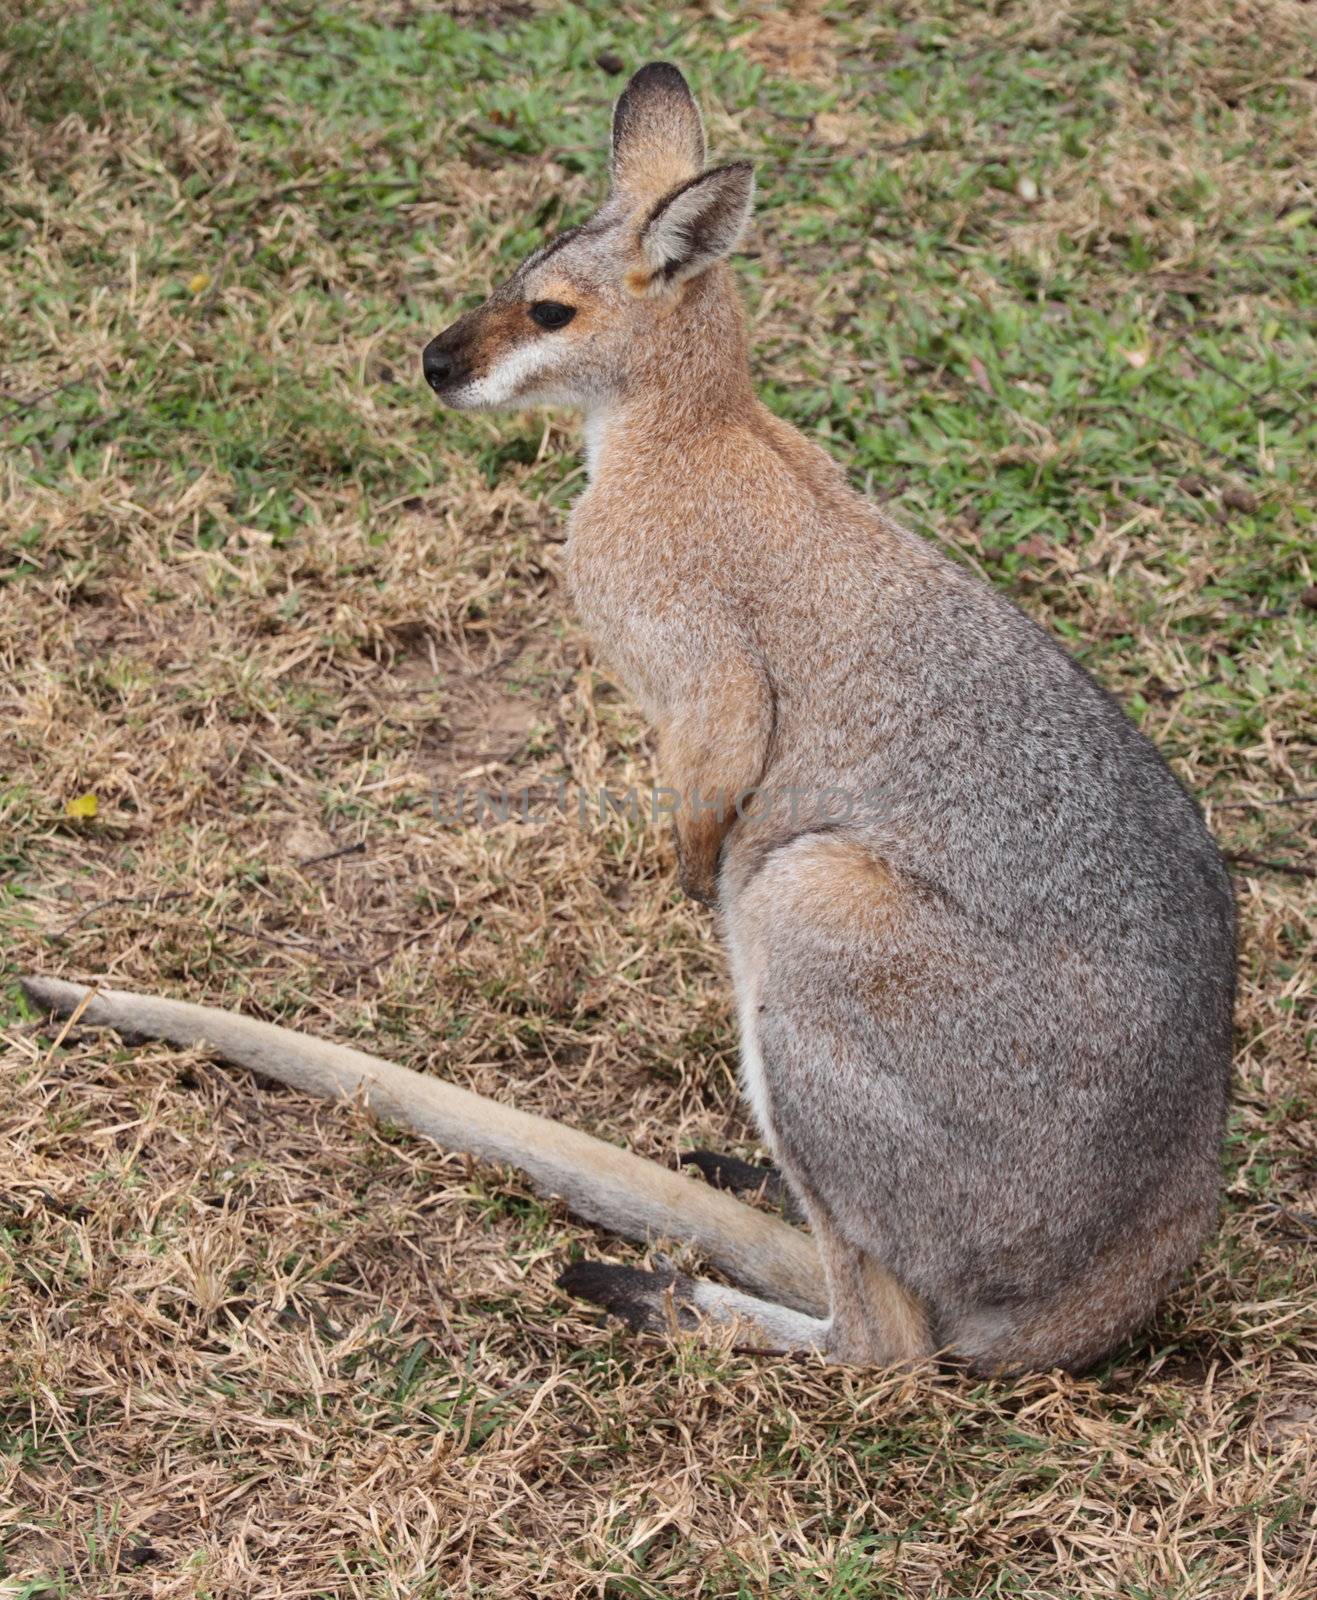 Small Australian Wallaby by KirbyWalkerPhotos